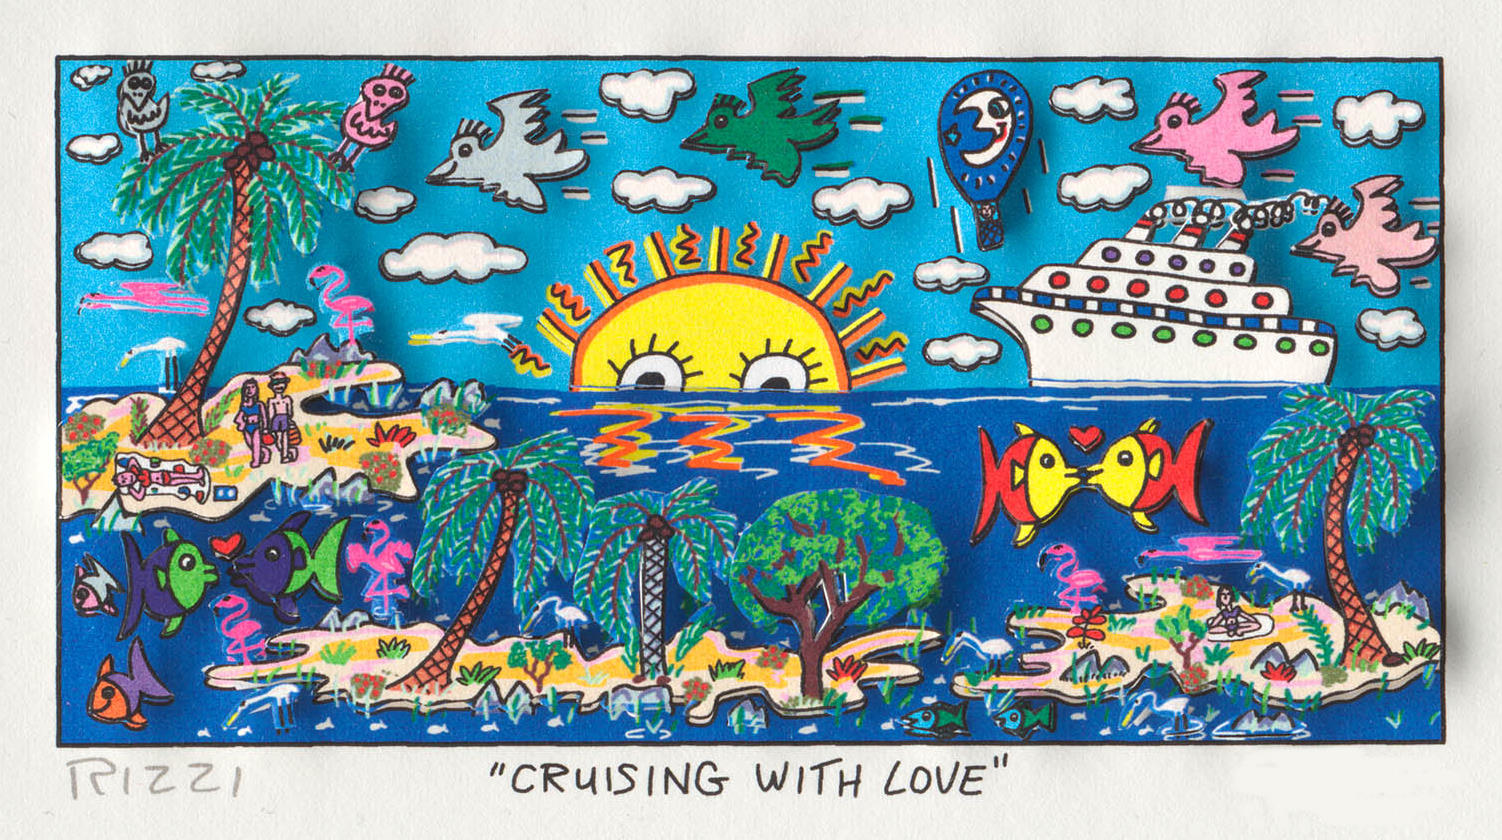 Cruising with Love